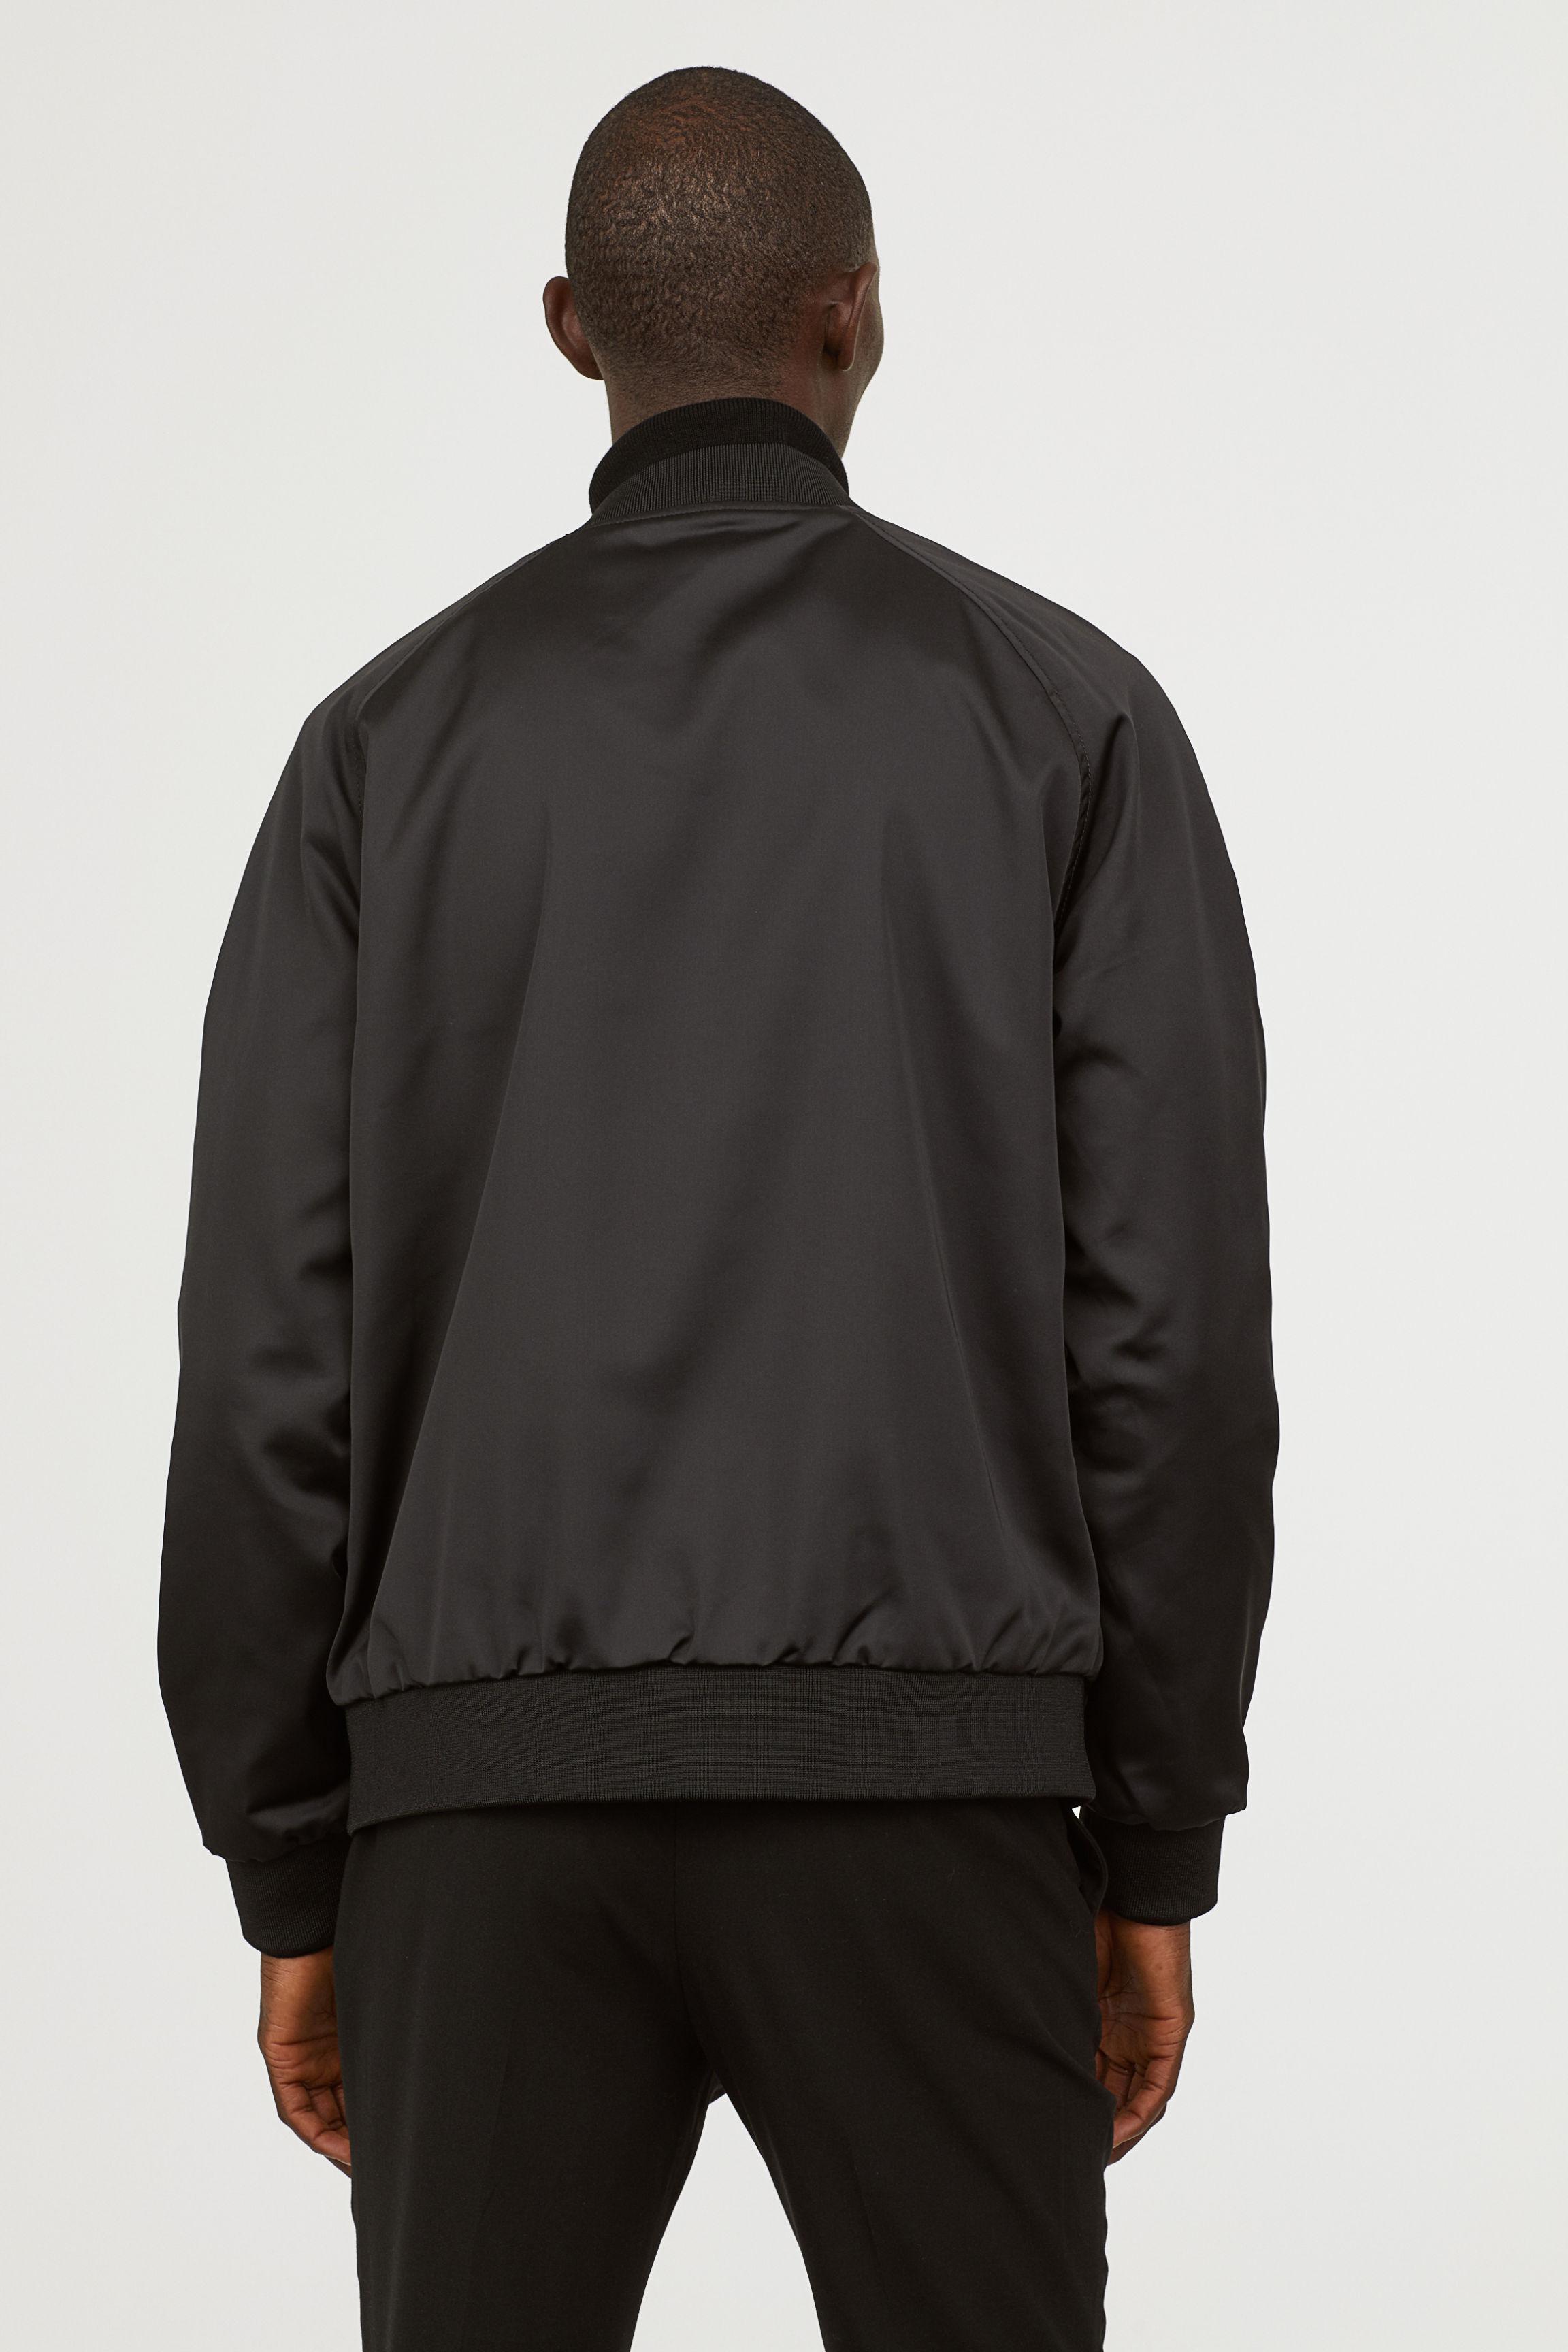 H&M Reversible Bomber Jacket in Black for Men - Lyst